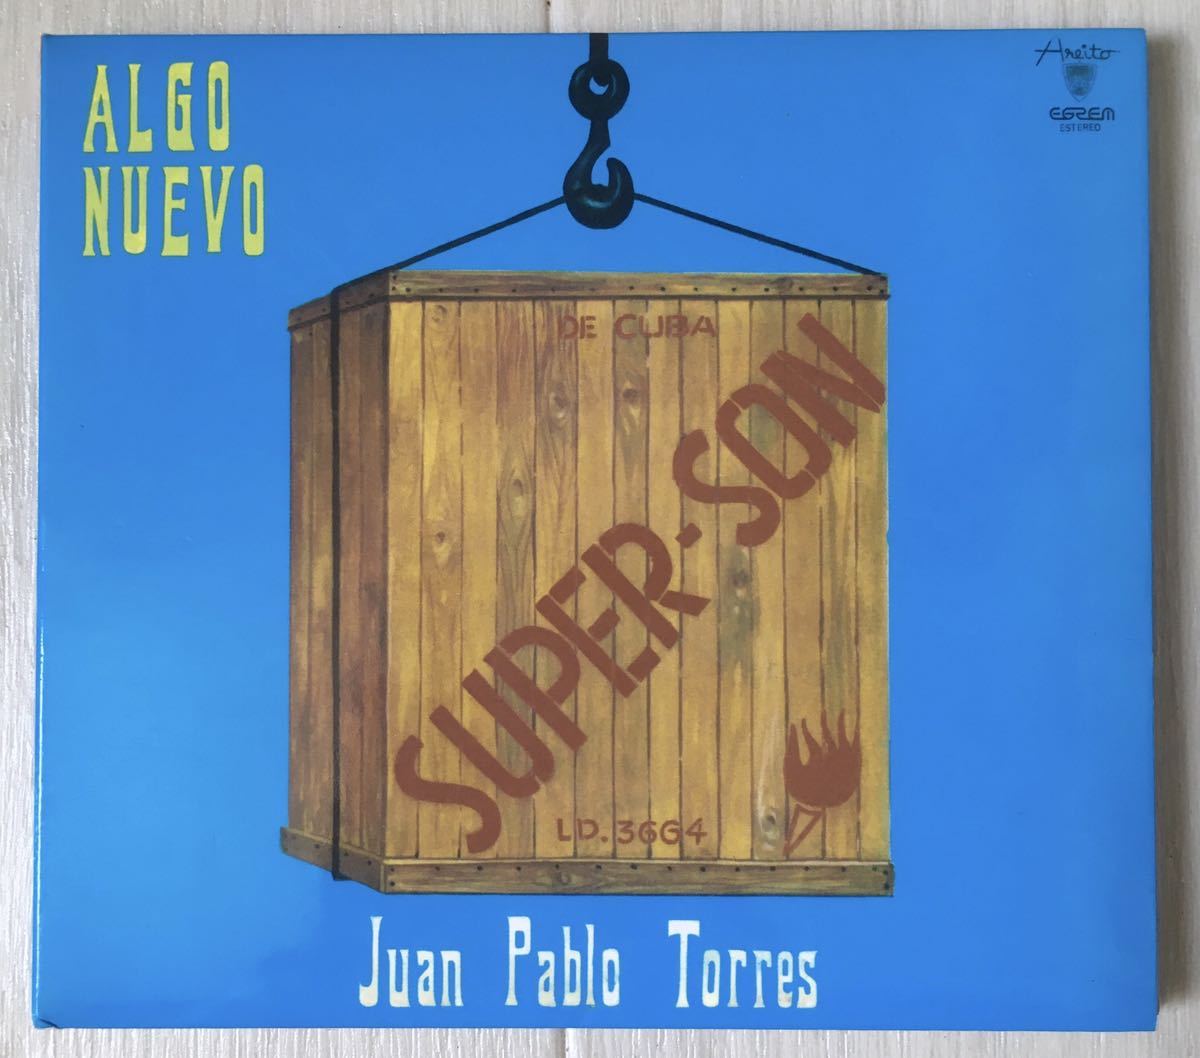  beautiful goods CD / Juan Pablo Torres - Algo Nuevo / Afro-Cuban Jazz-Funk Soul Latin Samba Rumba / cue ba. Spacy * fan k name record!!!